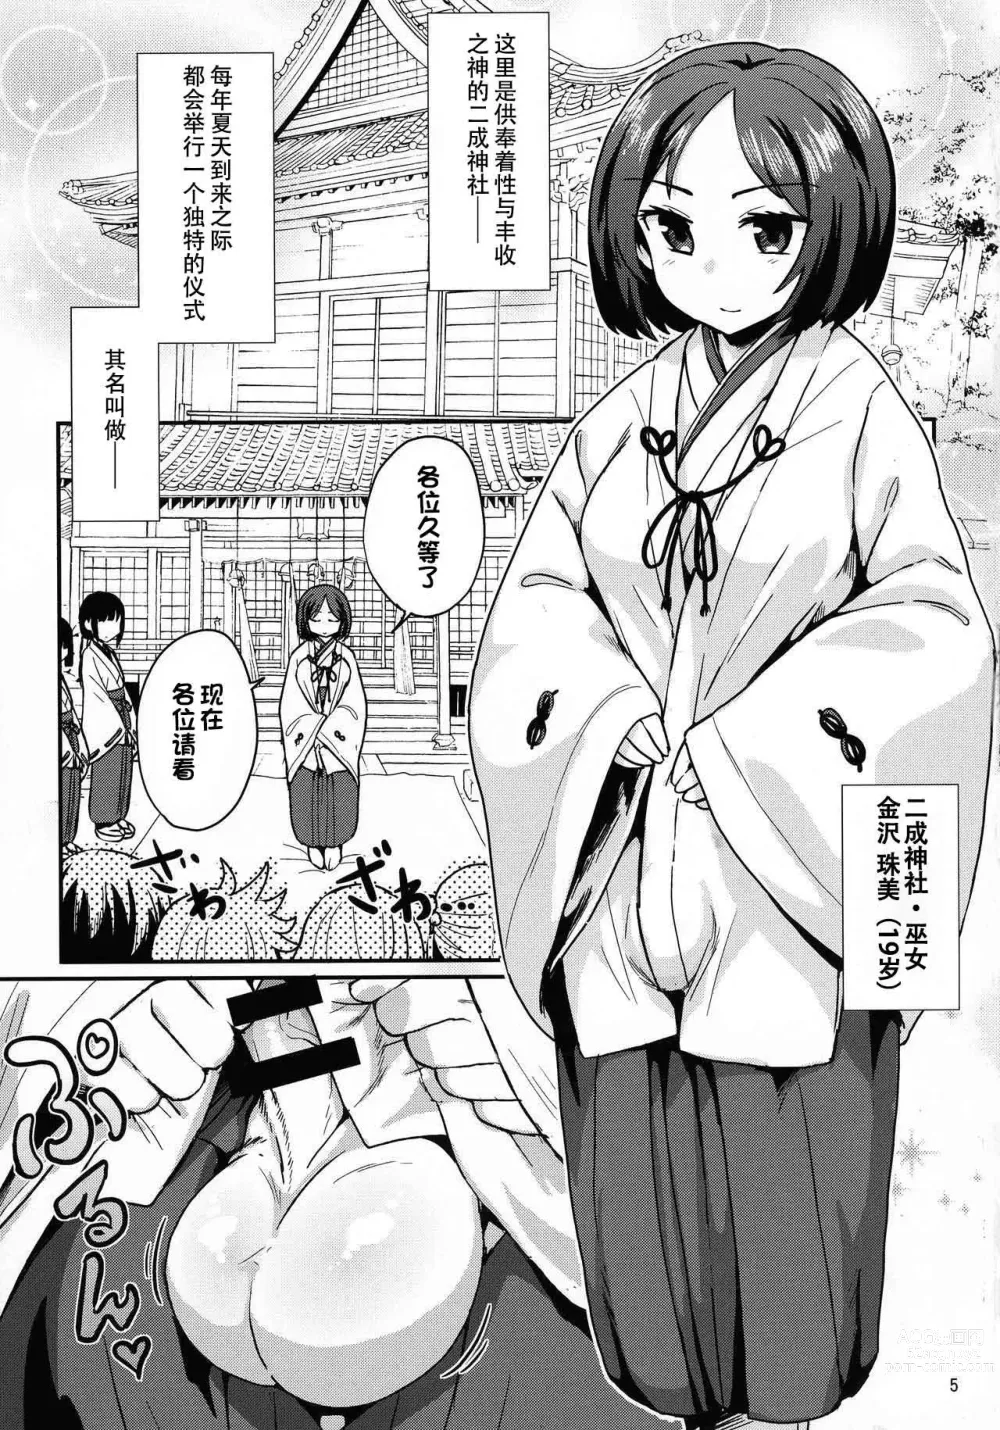 Page 5 of doujinshi Tama Miko